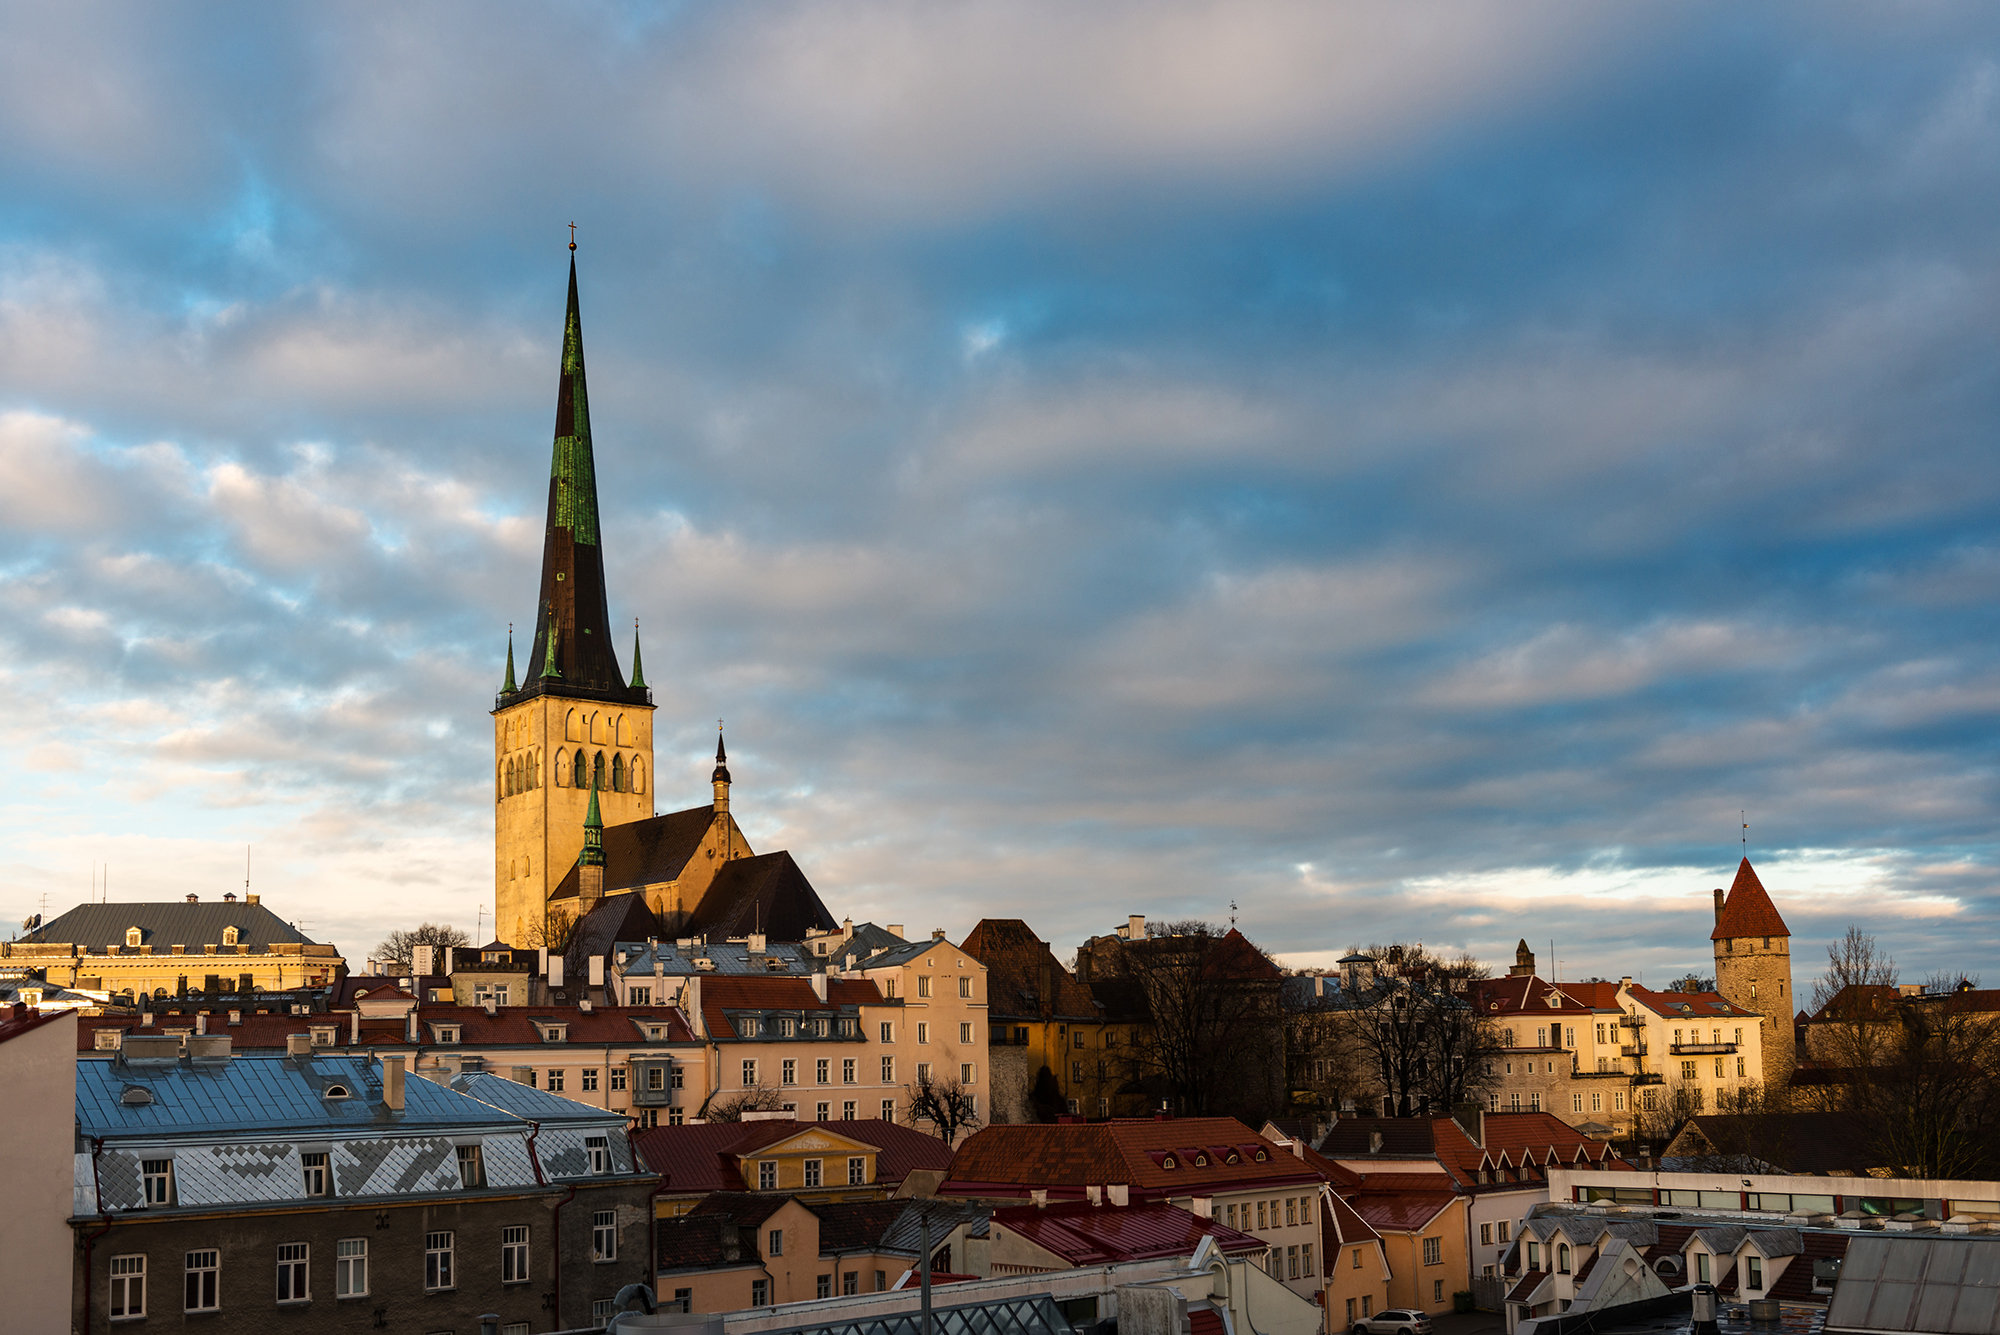 Dawn illuminating Tallinn's old town